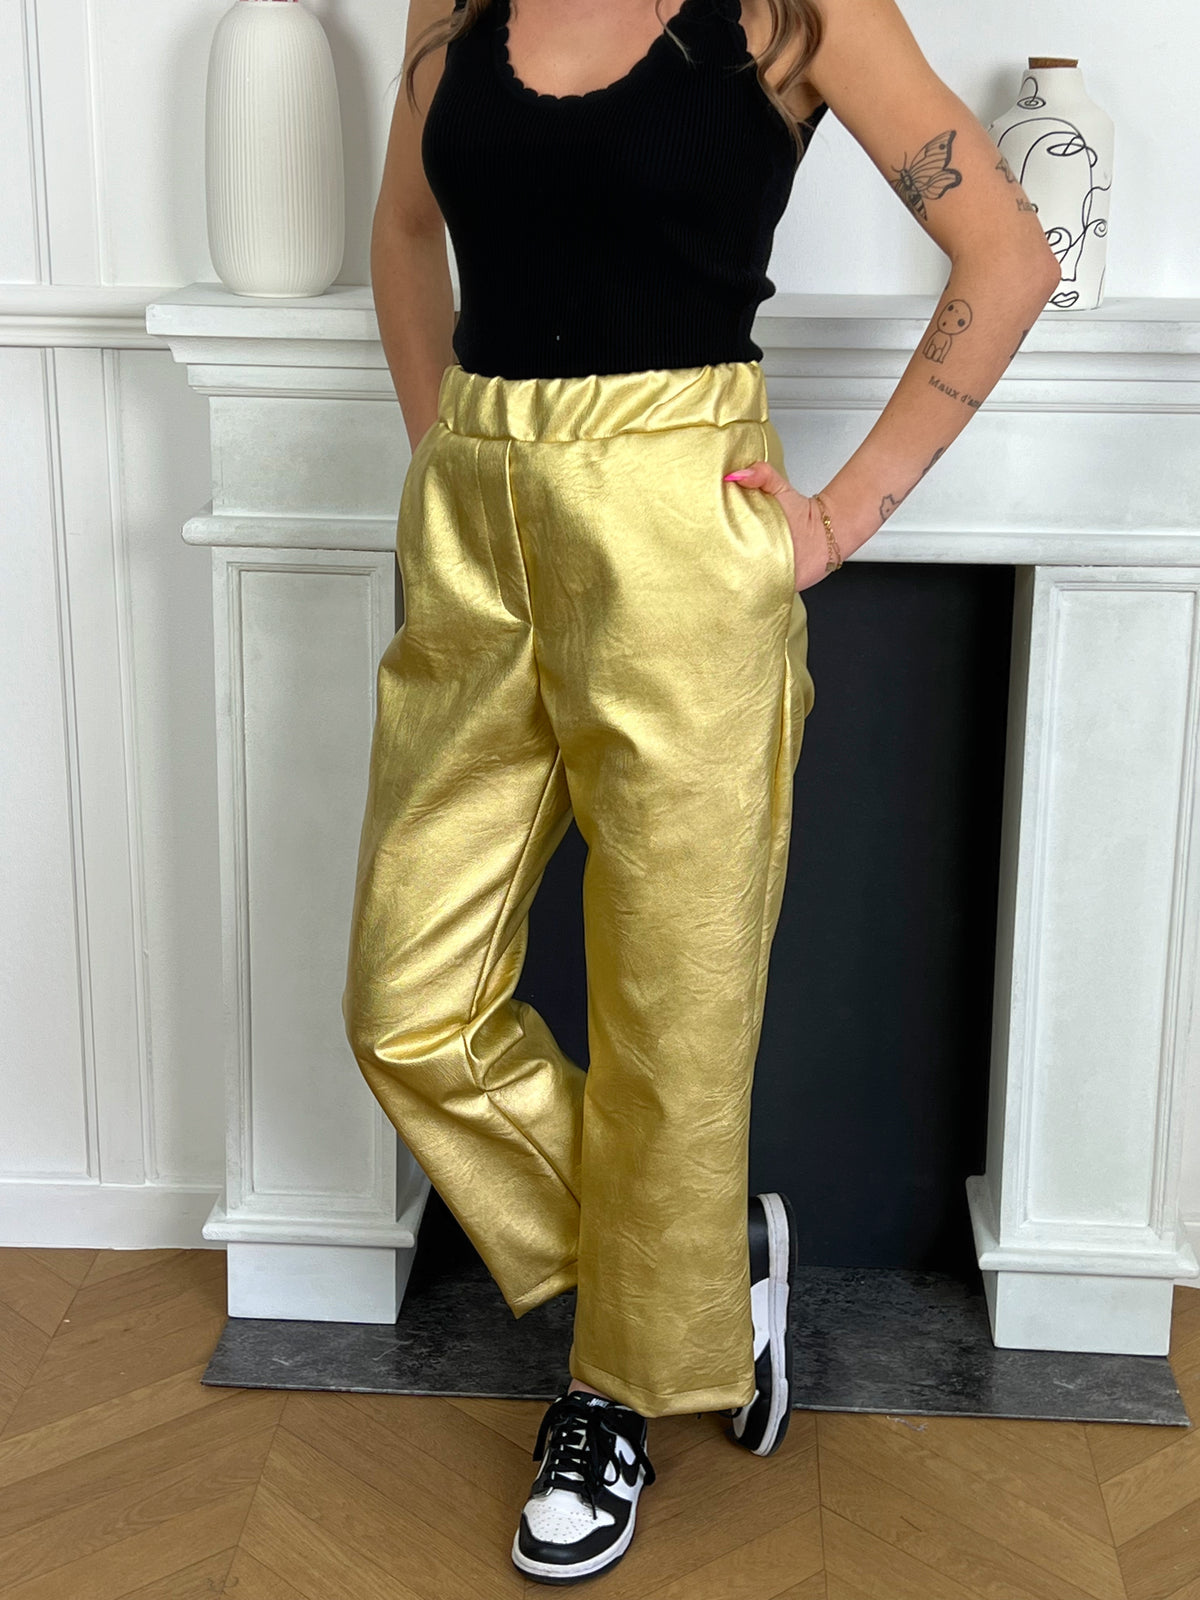 Pantalon doré Made in France : Bianca - Loïcia